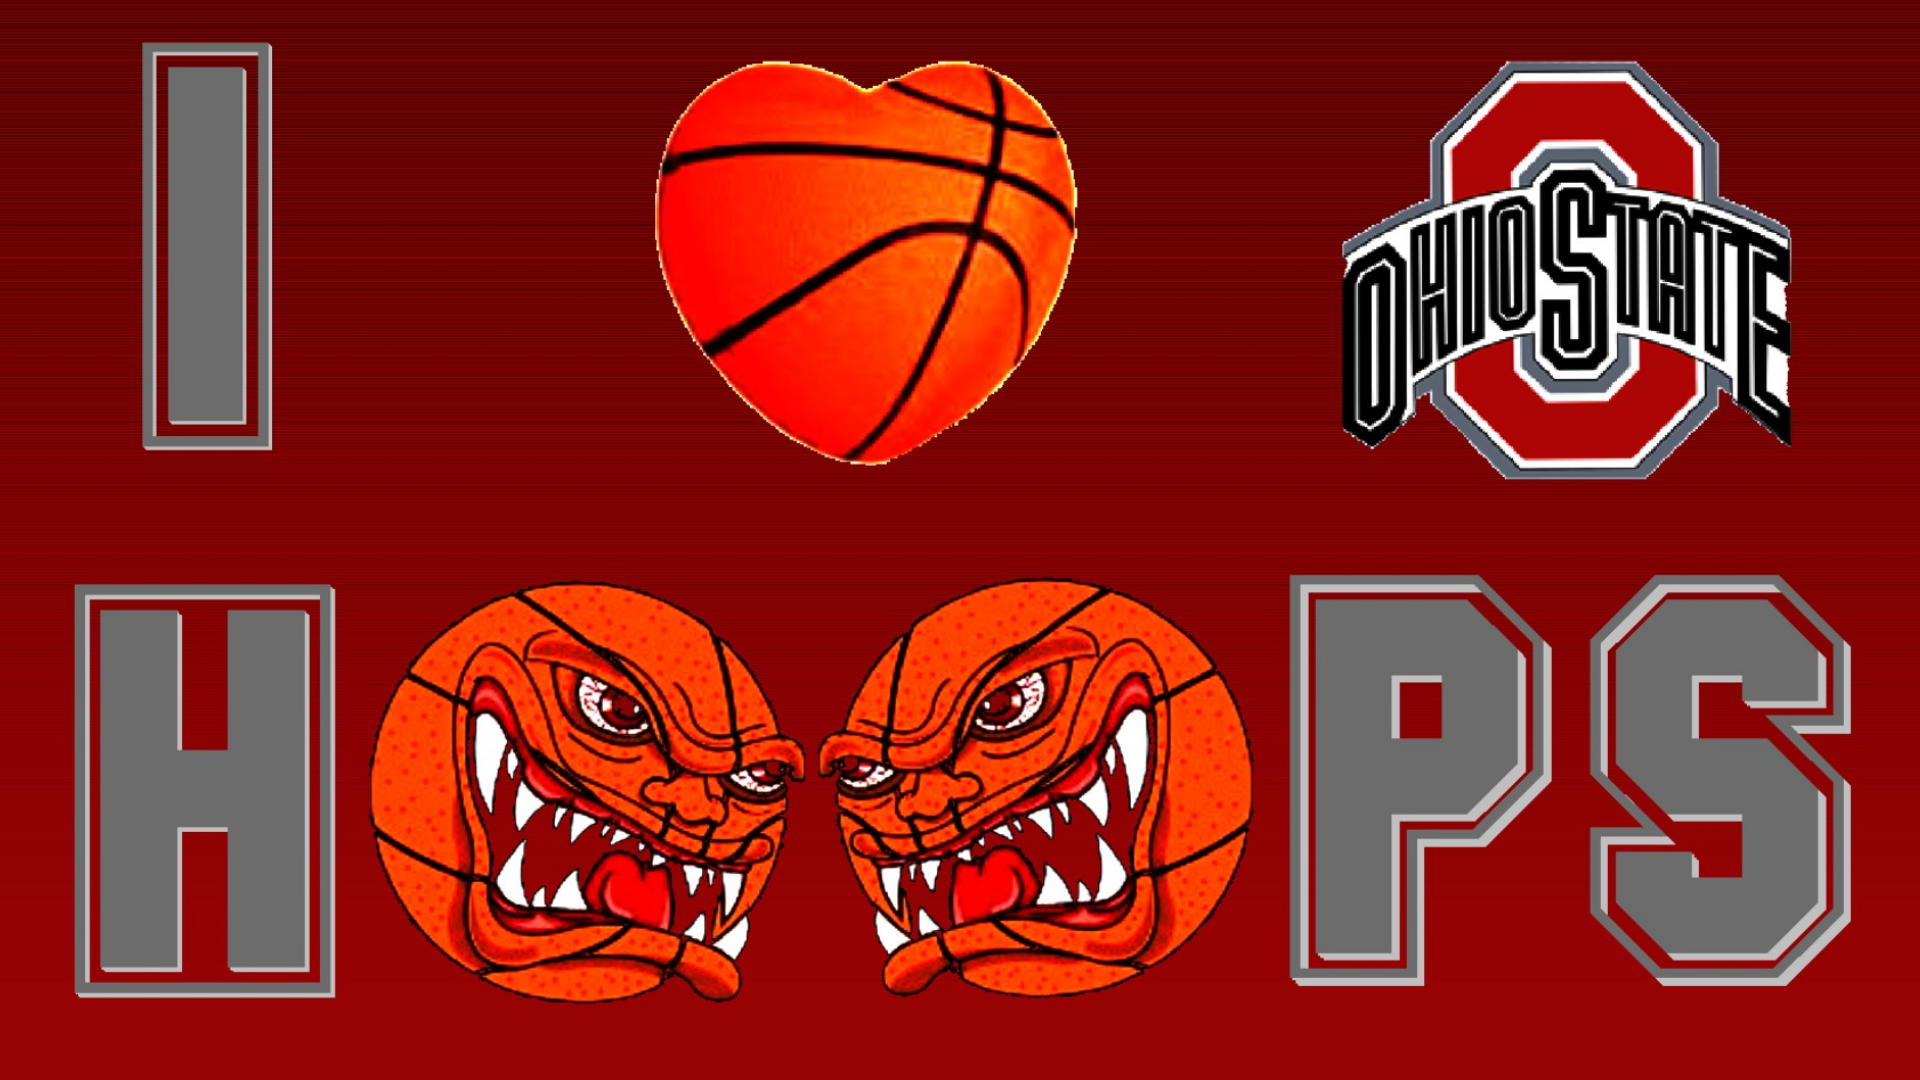 I HEART OHIO STATE HOOPS - Ohio State University Basketball Wallpaper (30017431) - Fanpop1920 x 1080